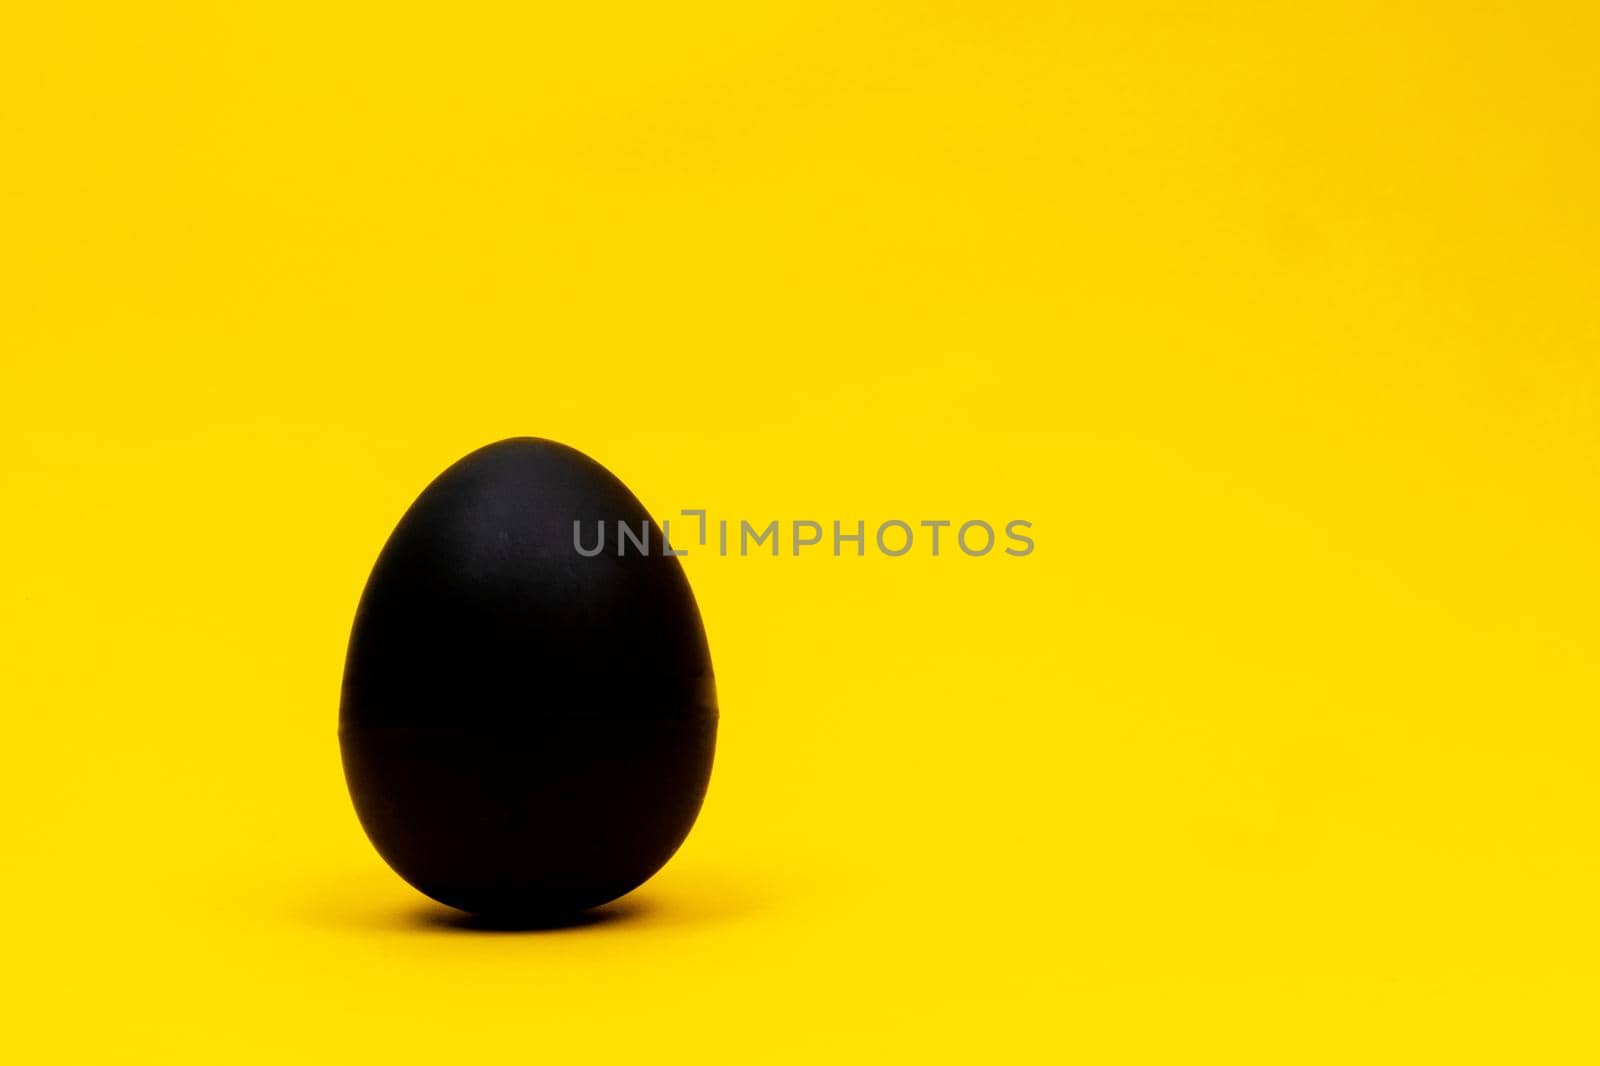 Black egg on yellow background by uveita